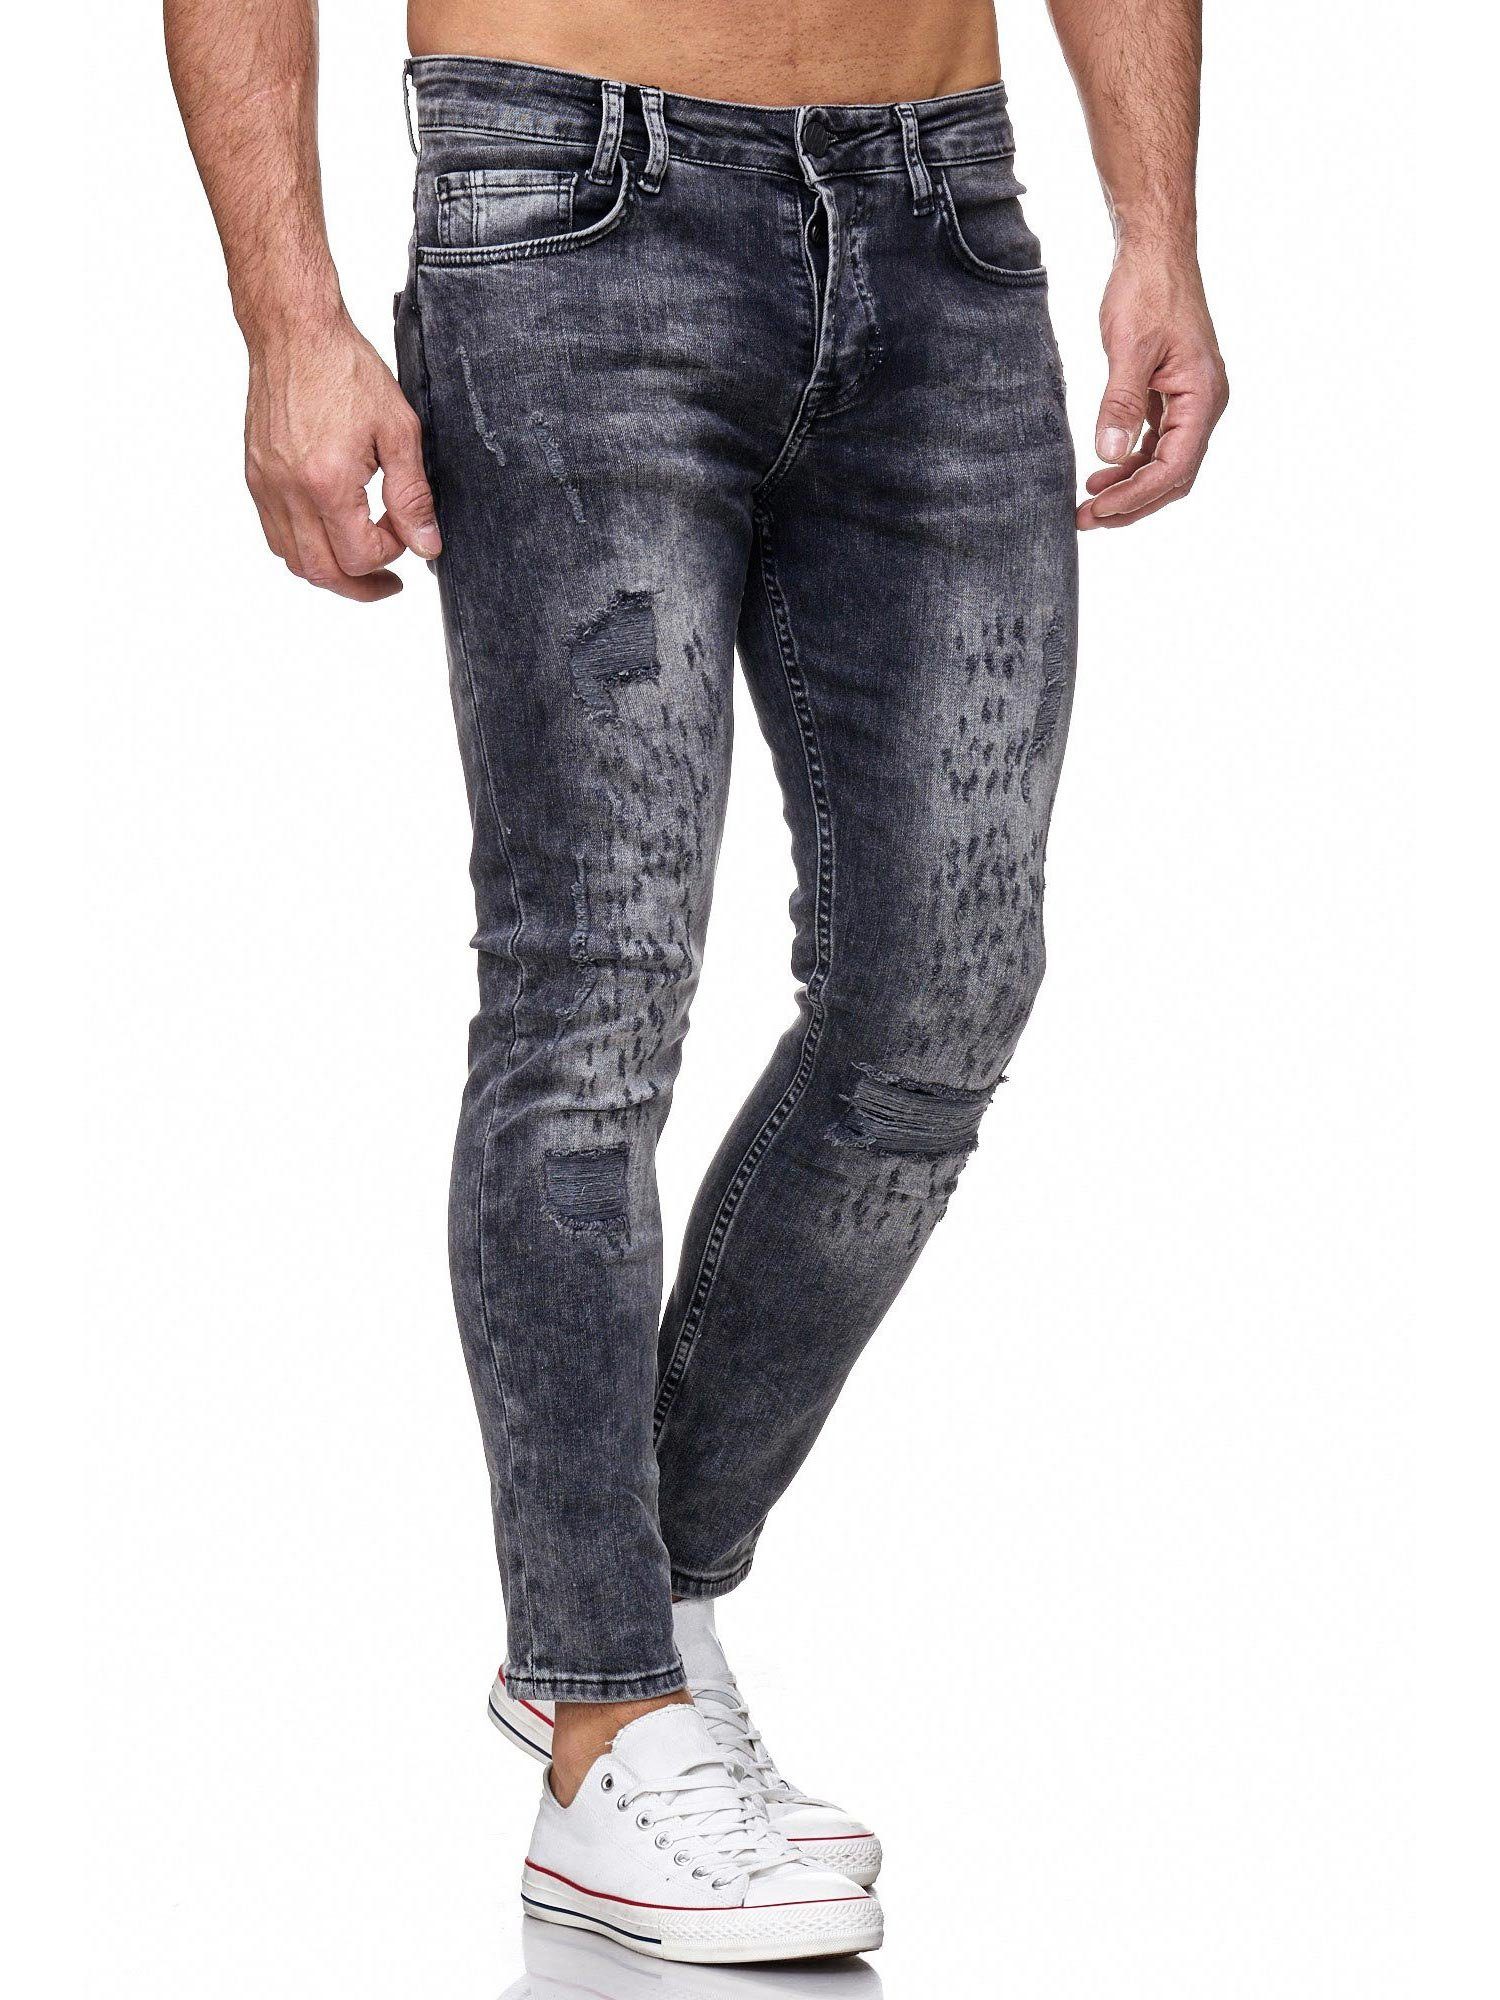 Tazzio Skinny-fit-Jeans 17516 im Destroyed-Look schwarz | Stretchjeans